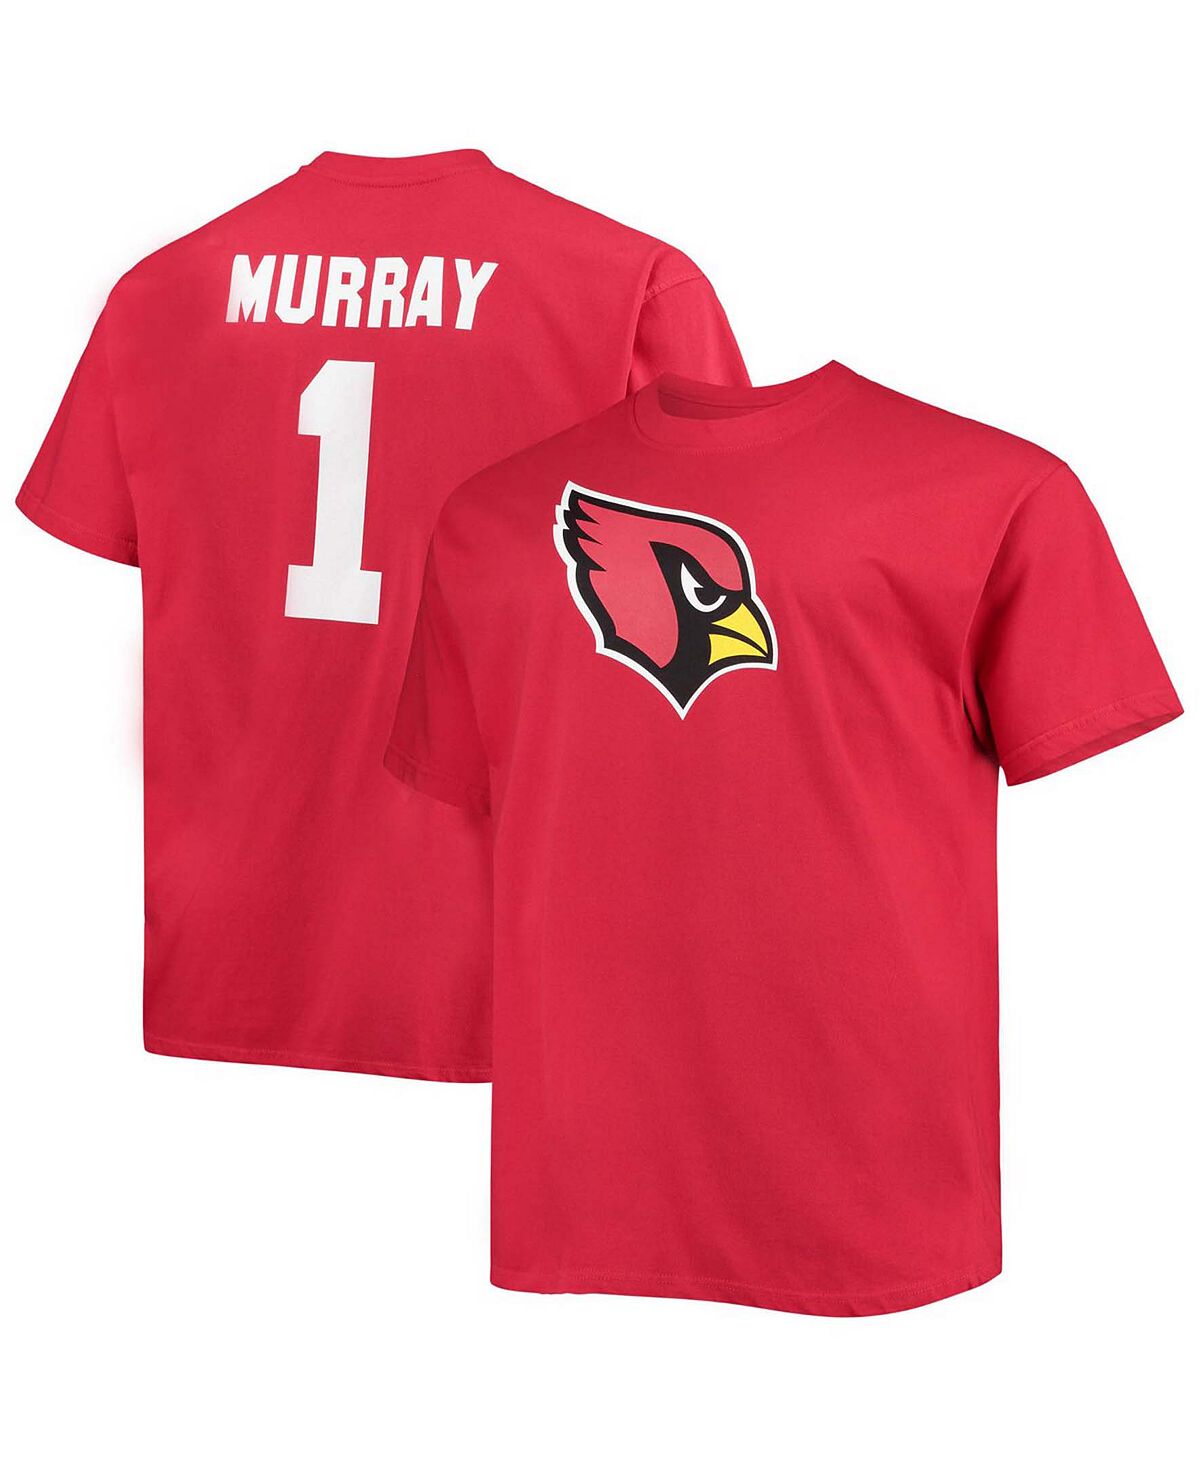 Мужская футболка Big and Tall Kyler Murray Cardinal Arizona Cardinals с именем игрока и номером Fanatics